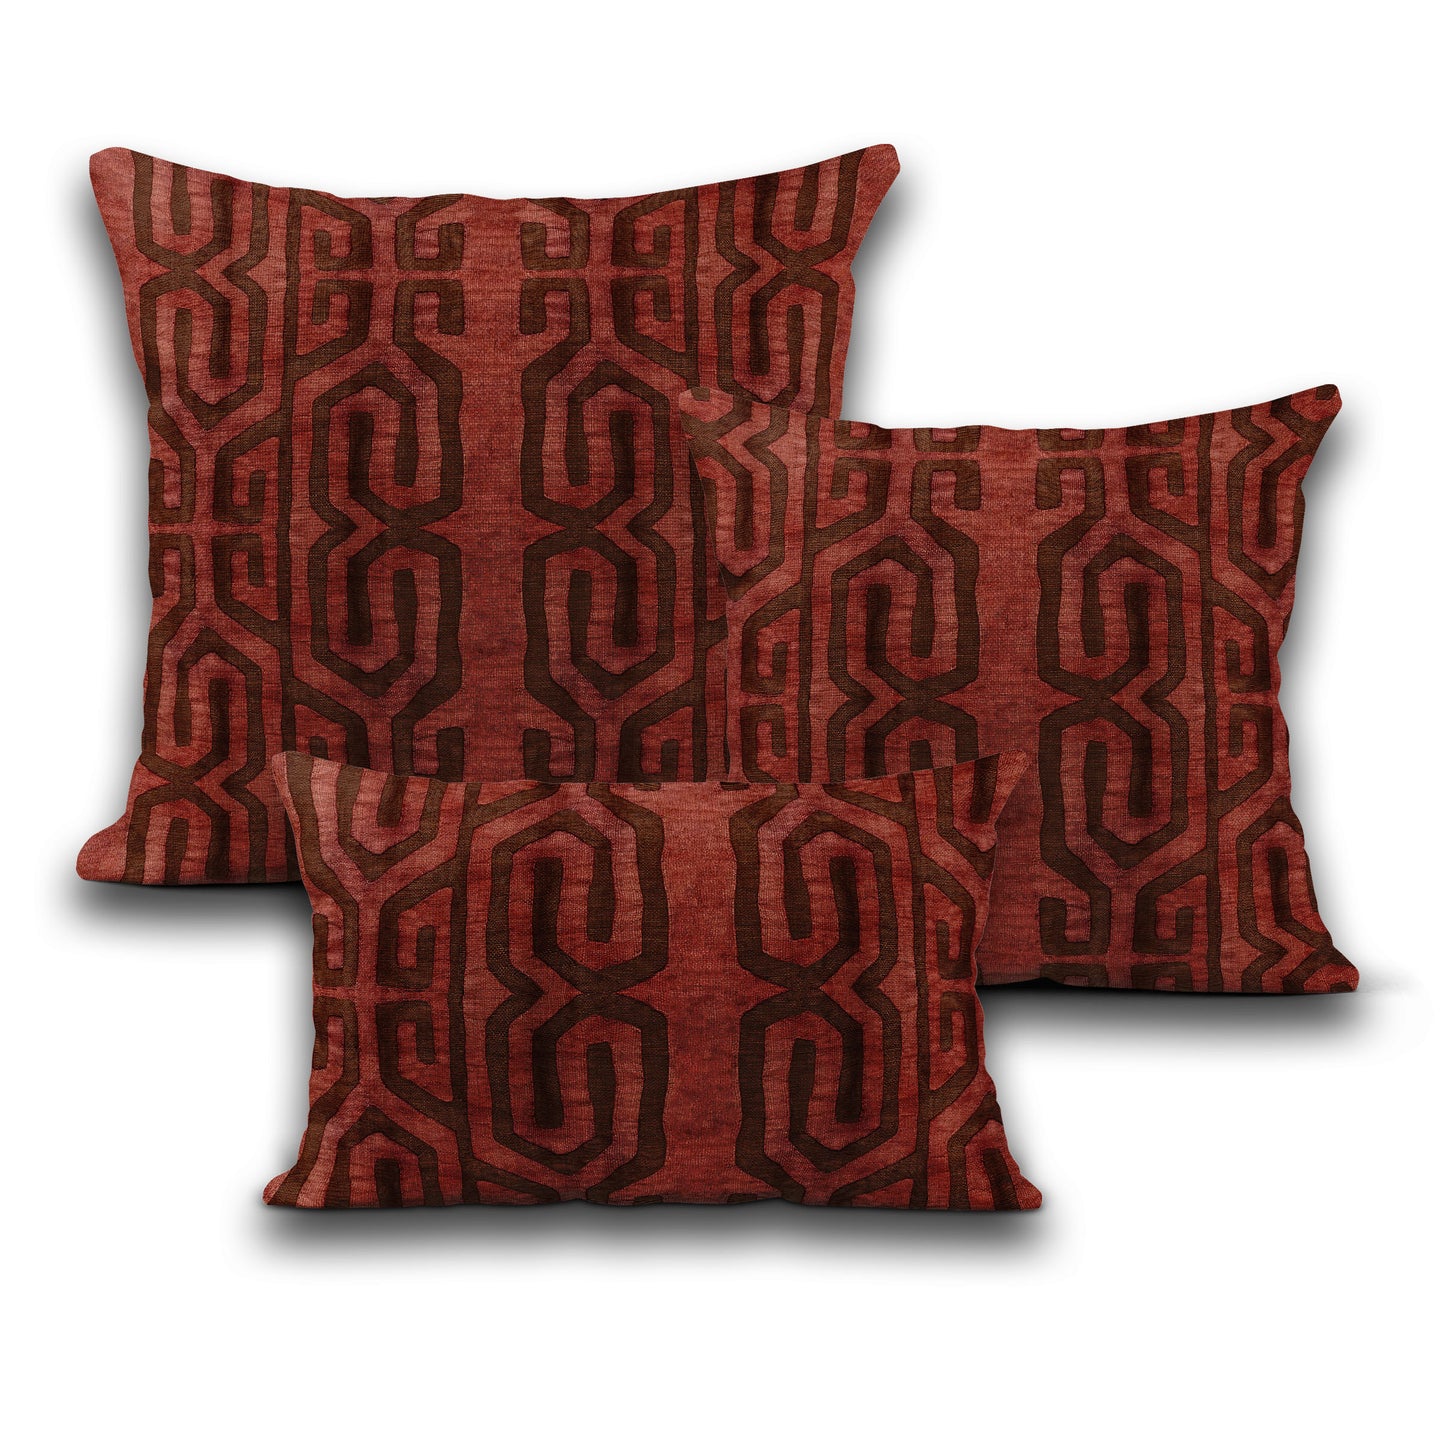 AnitaveeTextile Afrocentric Throw Pillows in Kuba Cloth Print - 3 Sizes